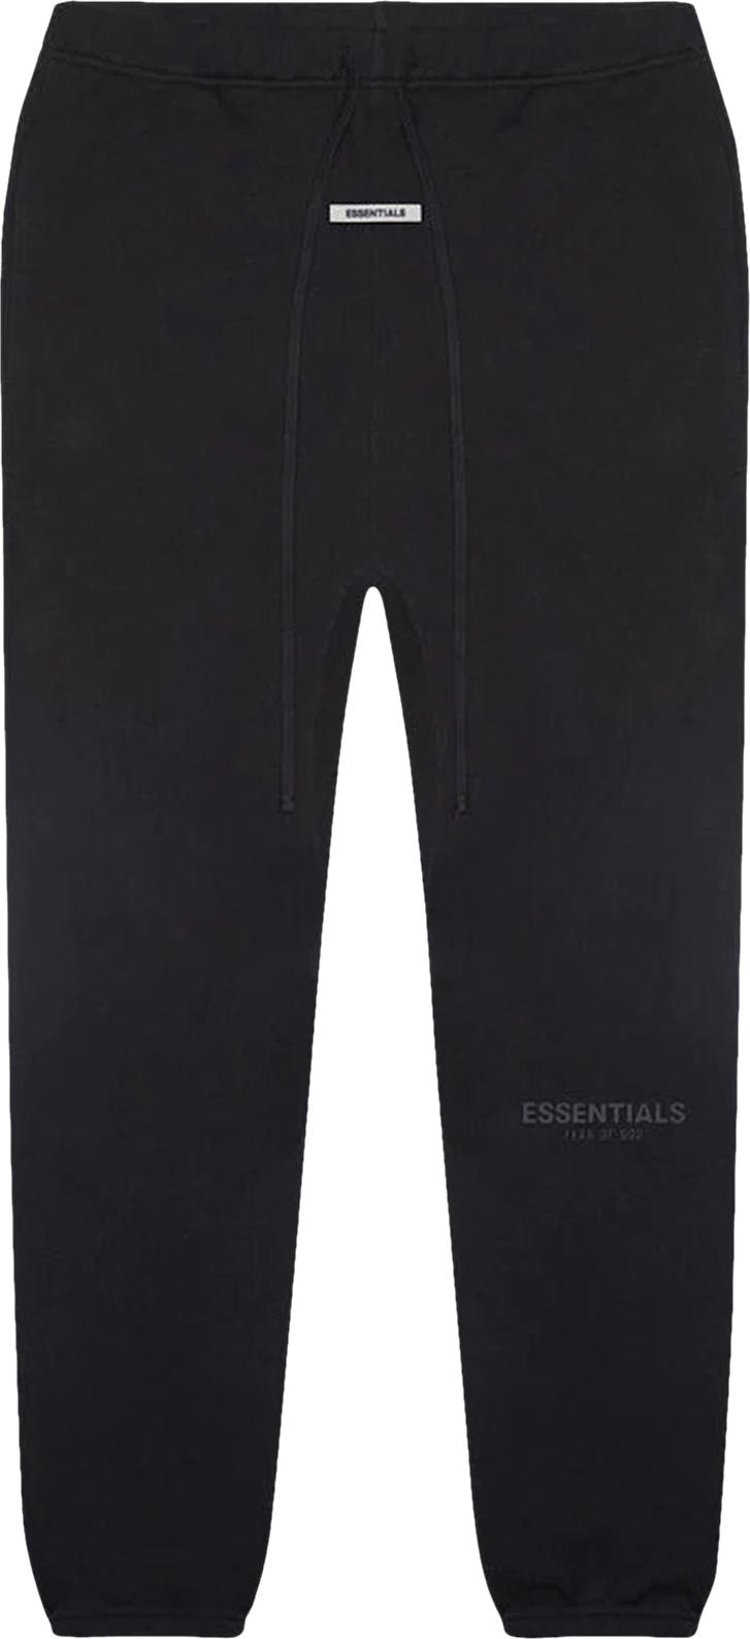 Buy Fear of God Essentials Sweatpants 'Black' - 0130 25050 0112